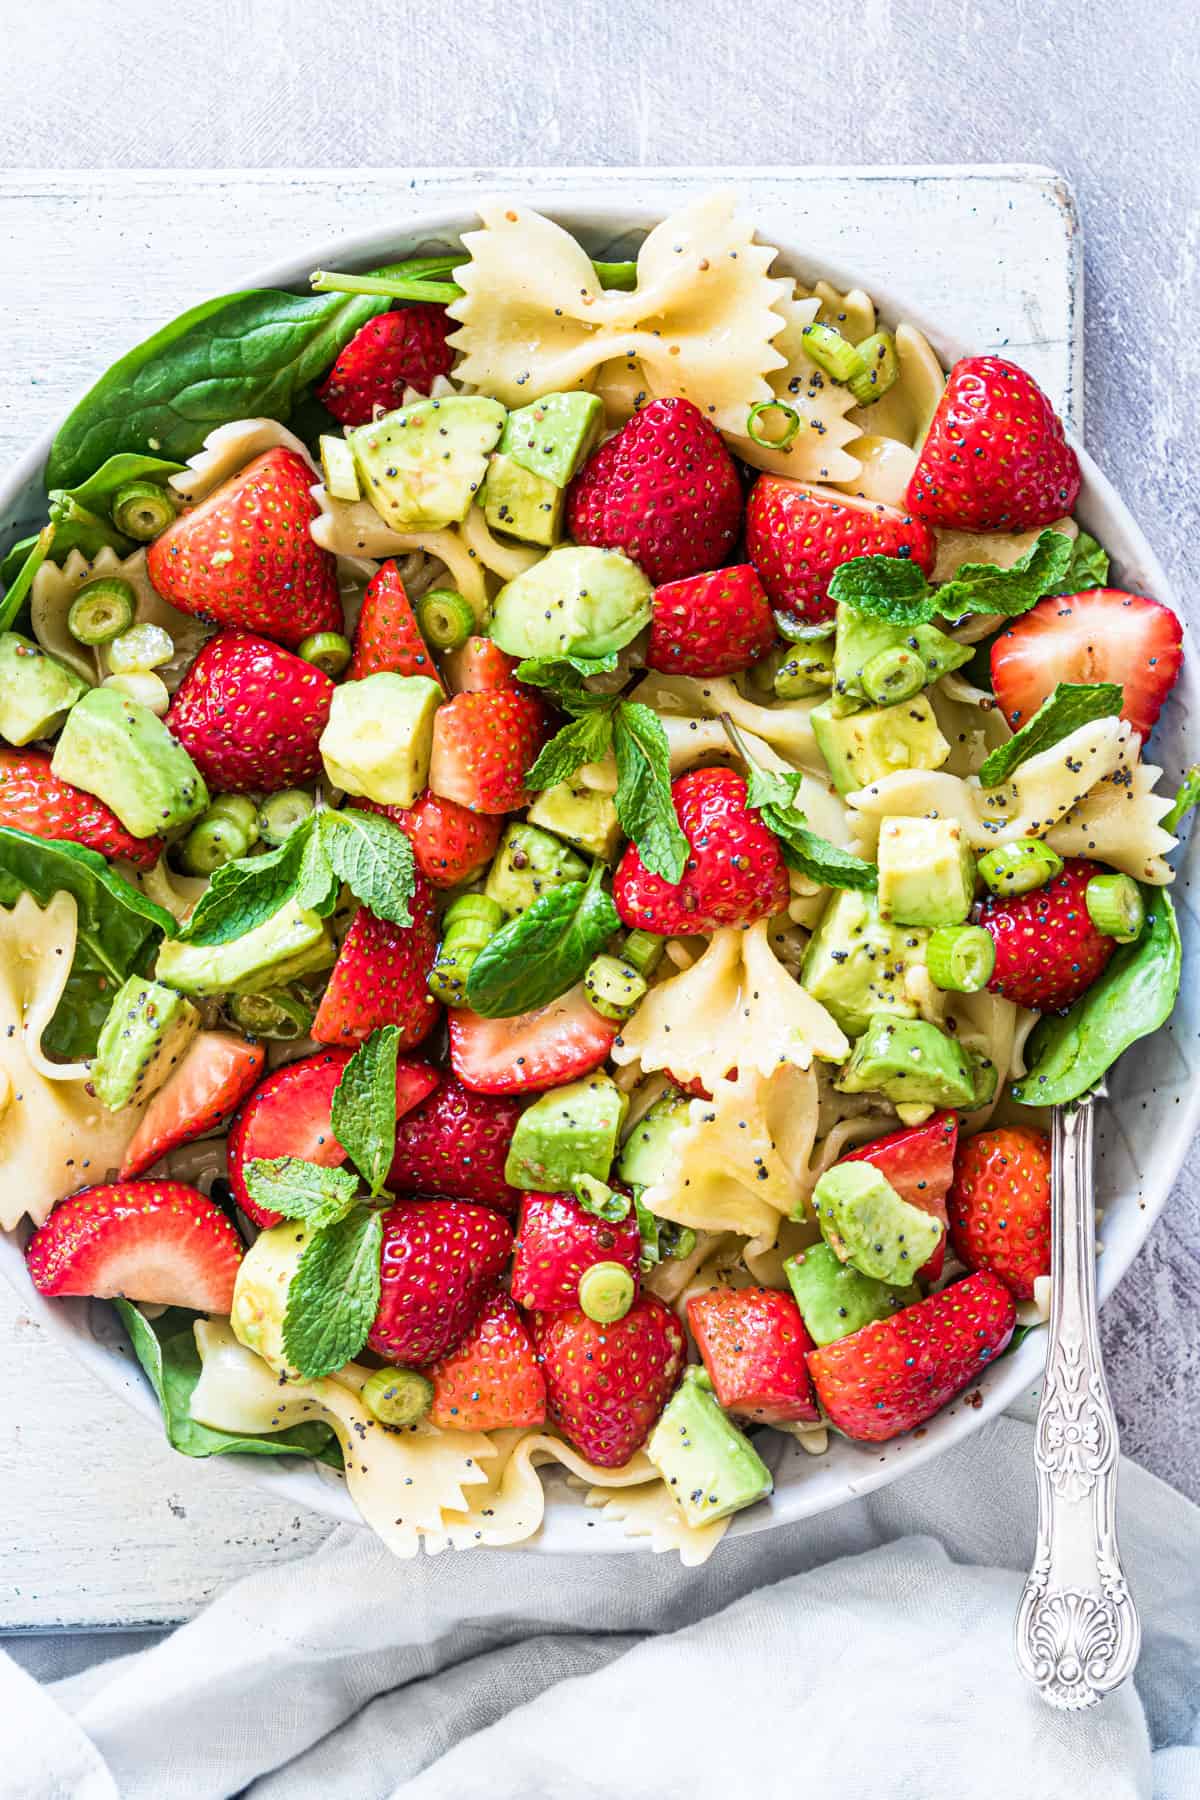 Strawberry avocado pasta salad on a plate